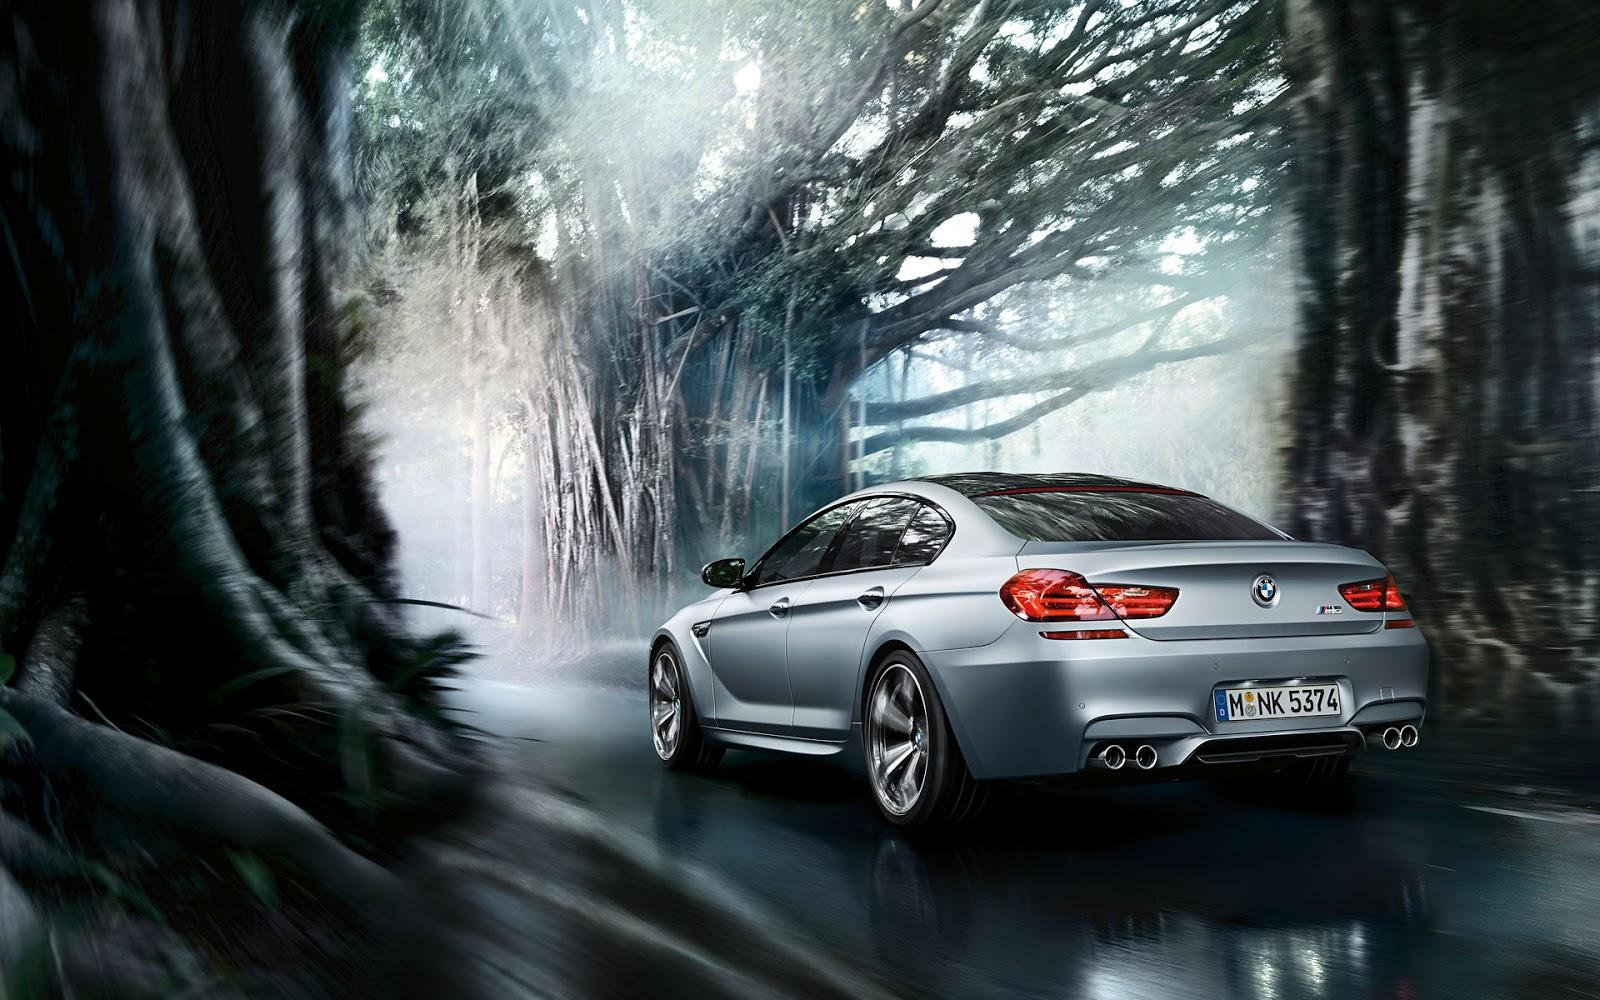 Epic 2014 BMW M6 Gran Coupe Wallpaper (Gallery)